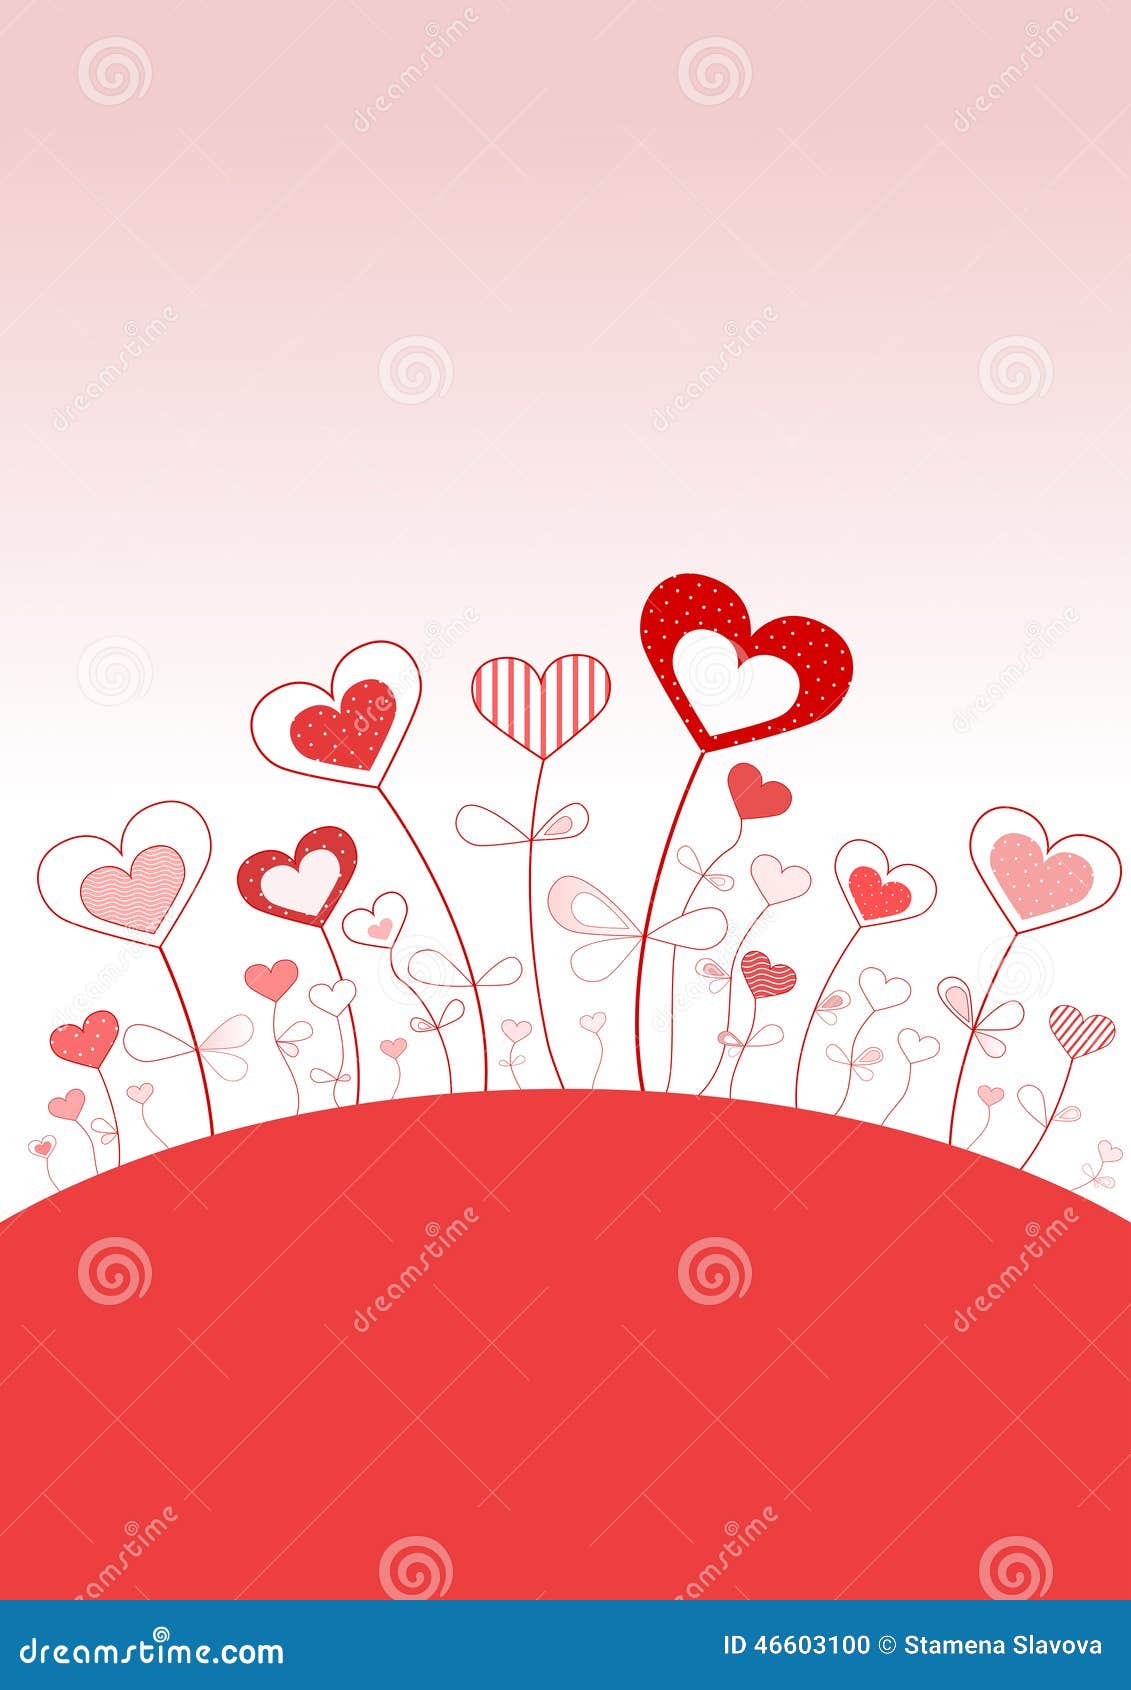 Hearts garden of love stock illustration. Illustration of cards - 46603100